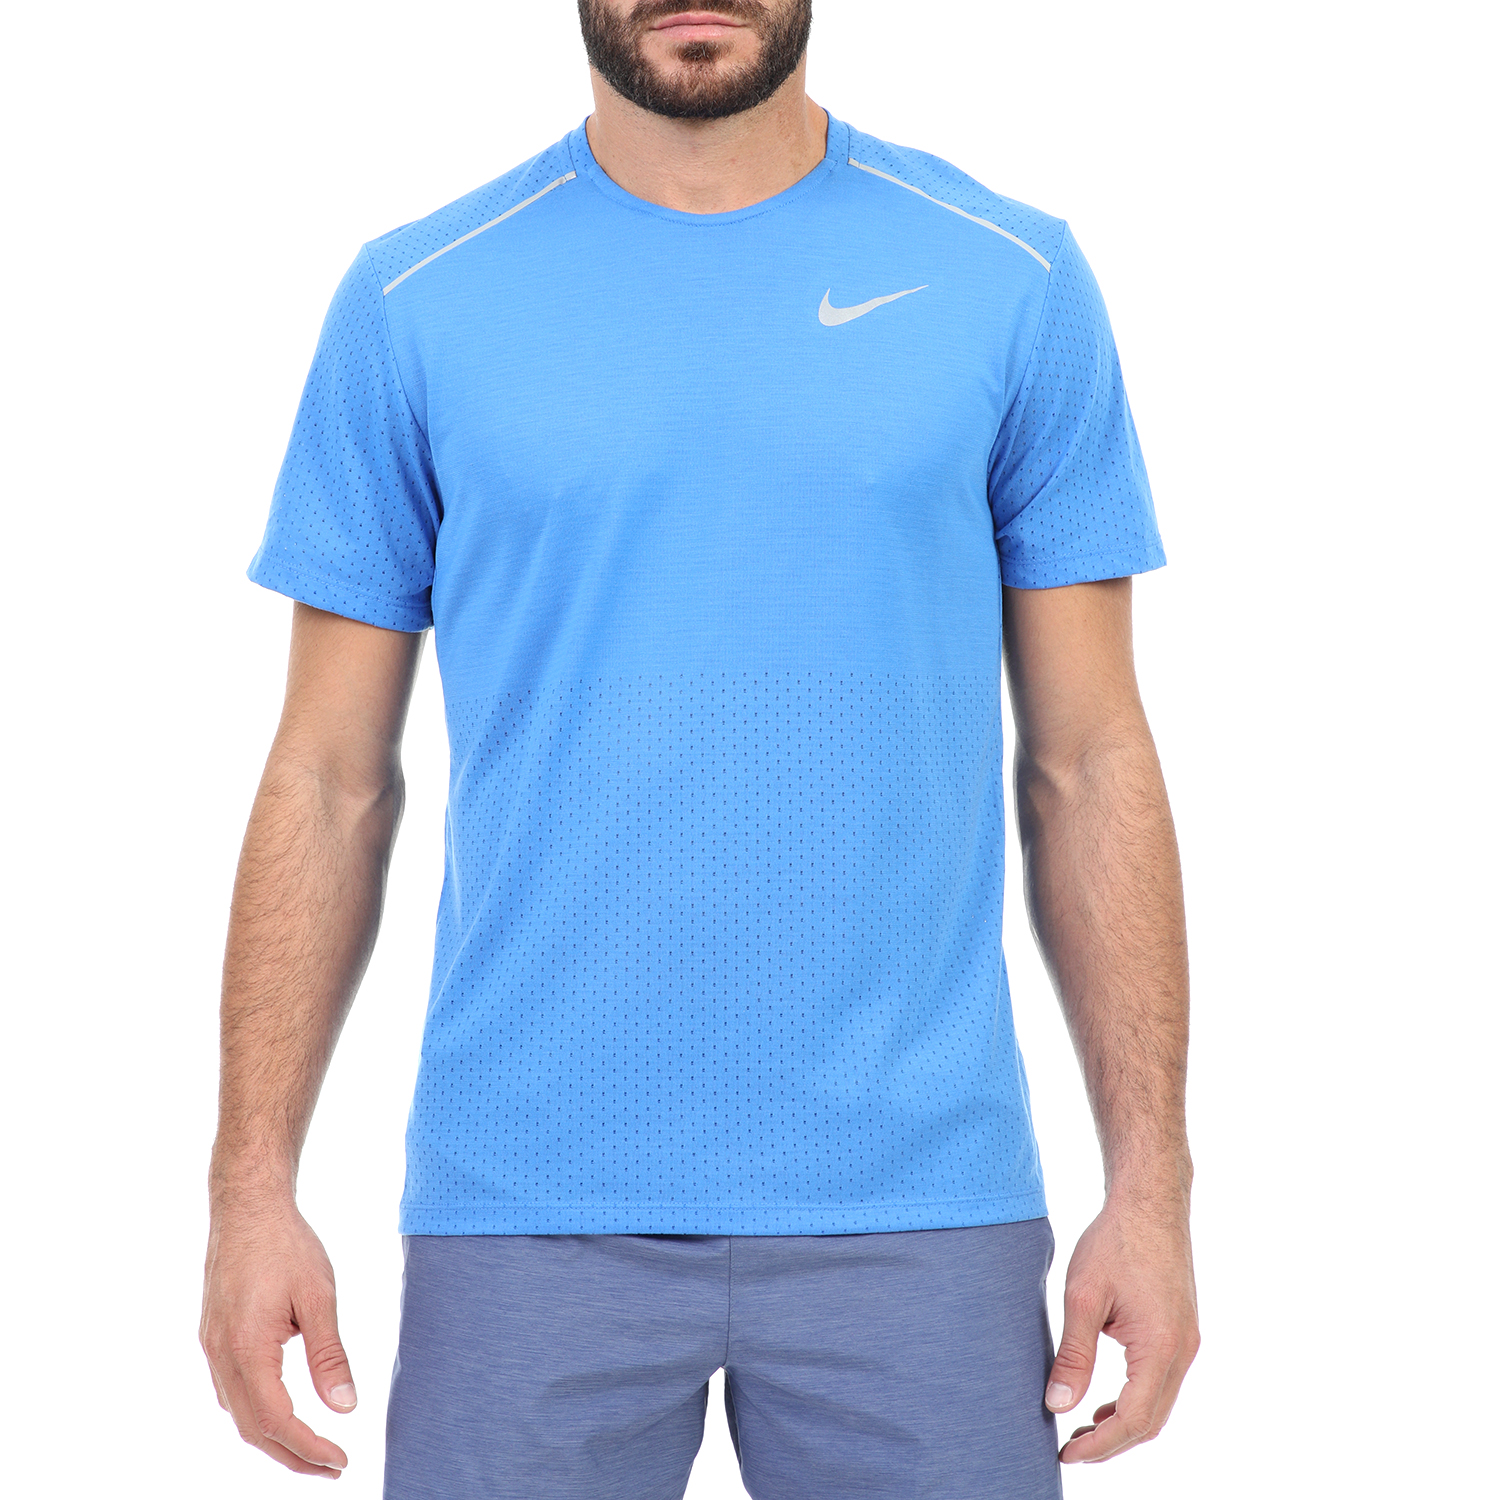 NIKE - Ανδρικό t-shirt NIKE BRTHE RISE 365 SS μπλε Ανδρικά/Ρούχα/Αθλητικά/T-shirt